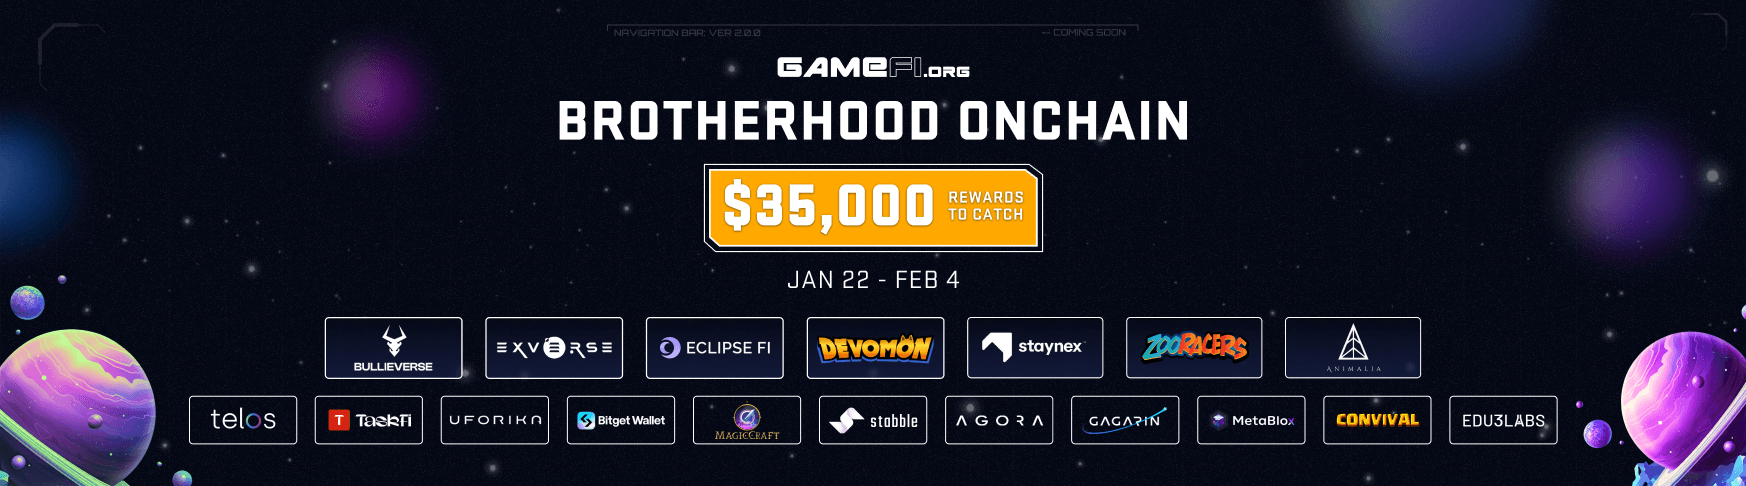 Brotherhood Onchain [hosted by GameFi.org]